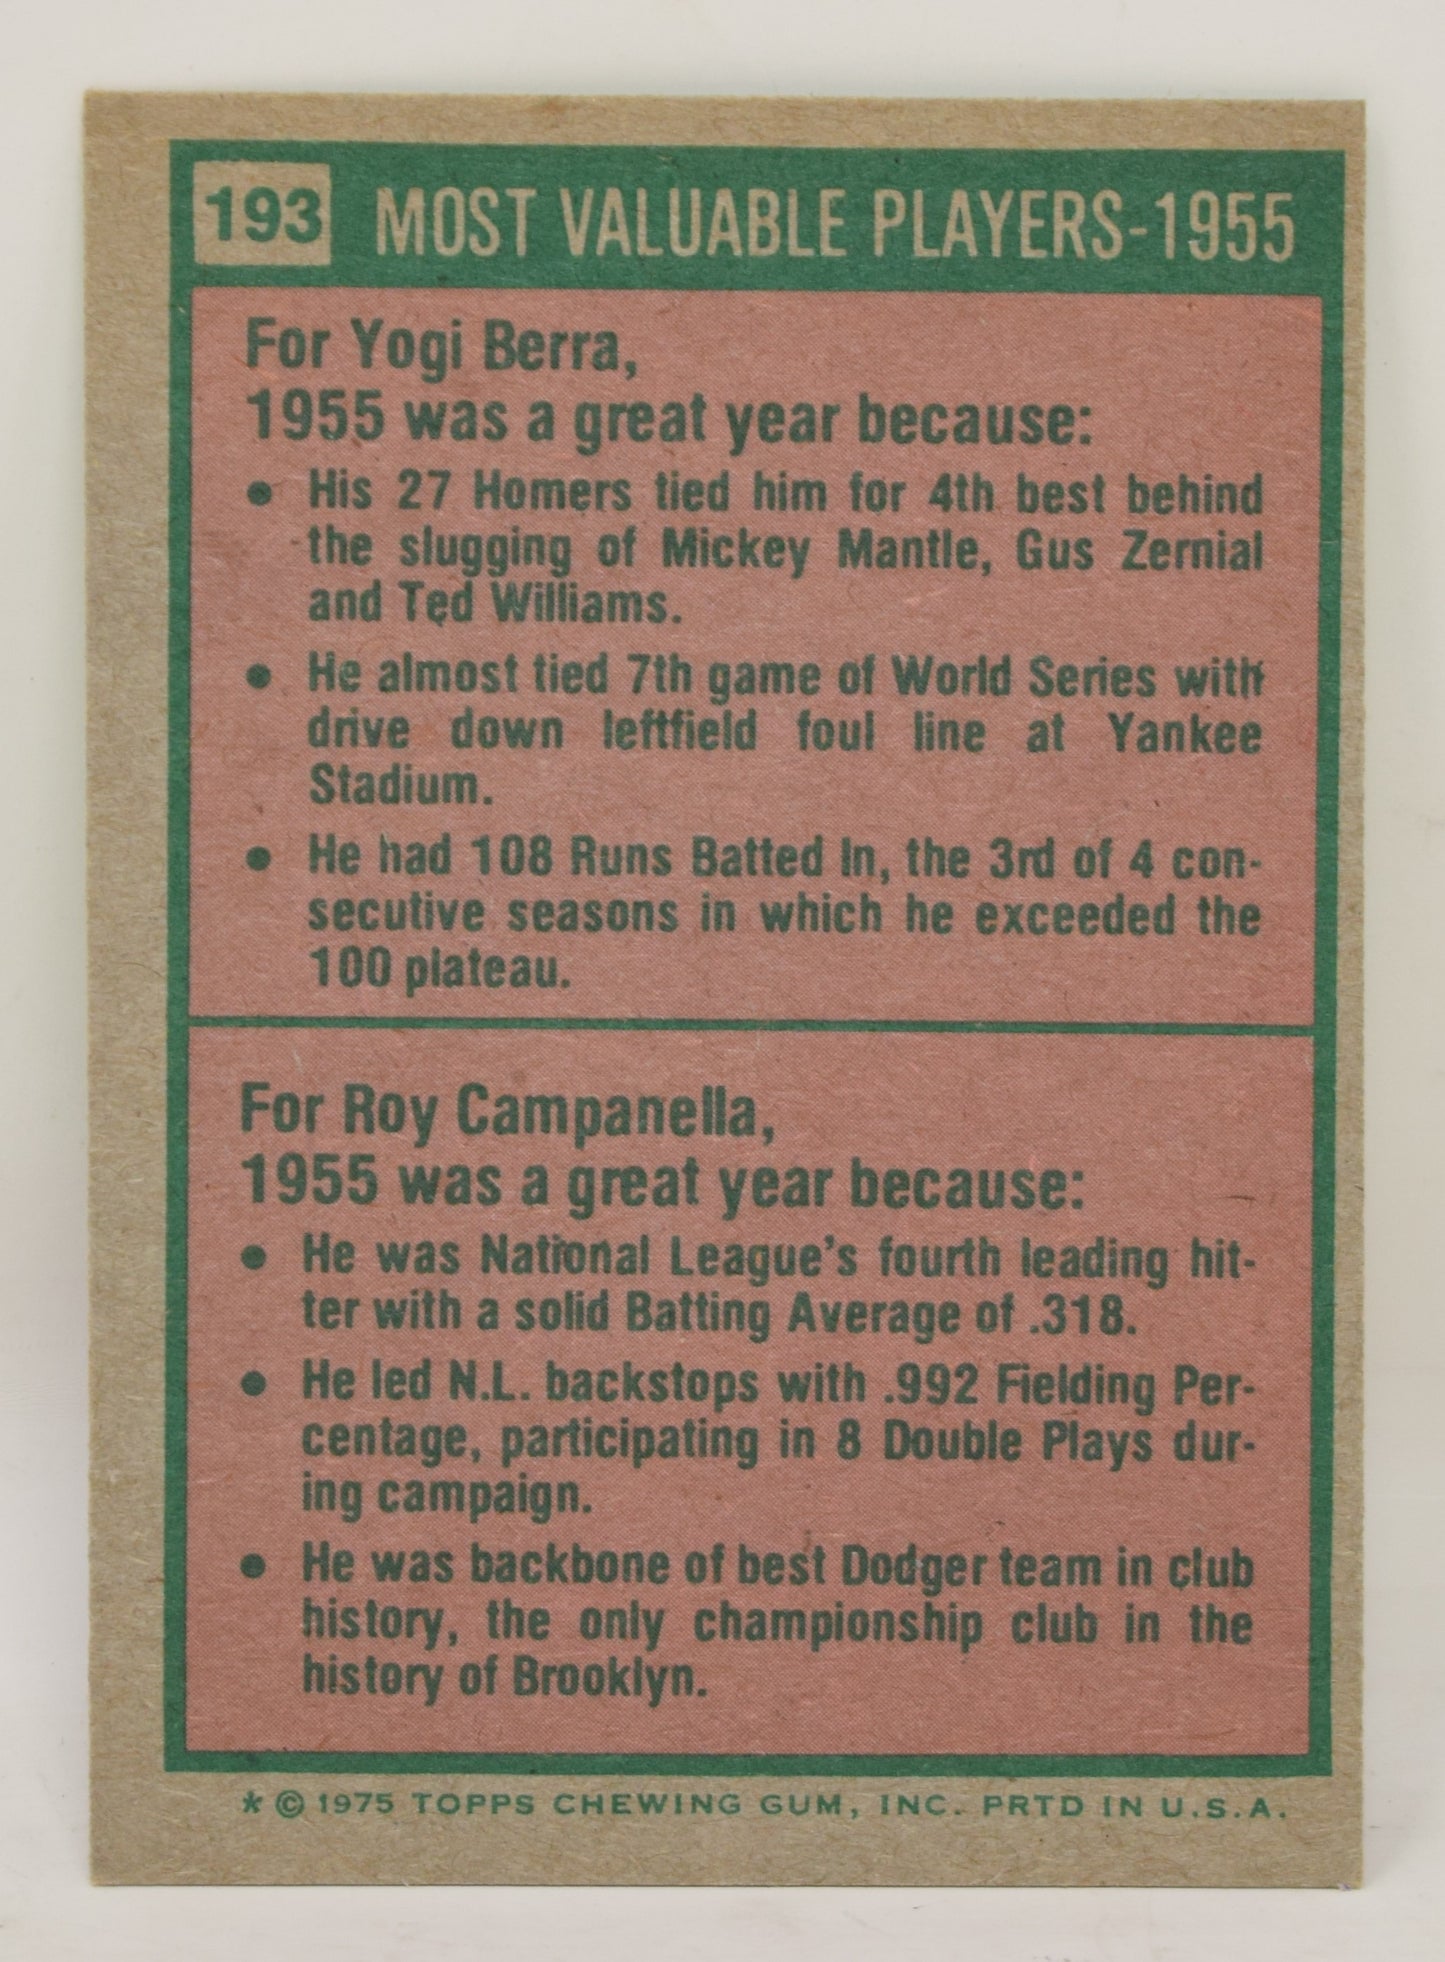 Yogi Berra Roy Campanella Baseball Card Topps 1975 Most Valuable Player 193